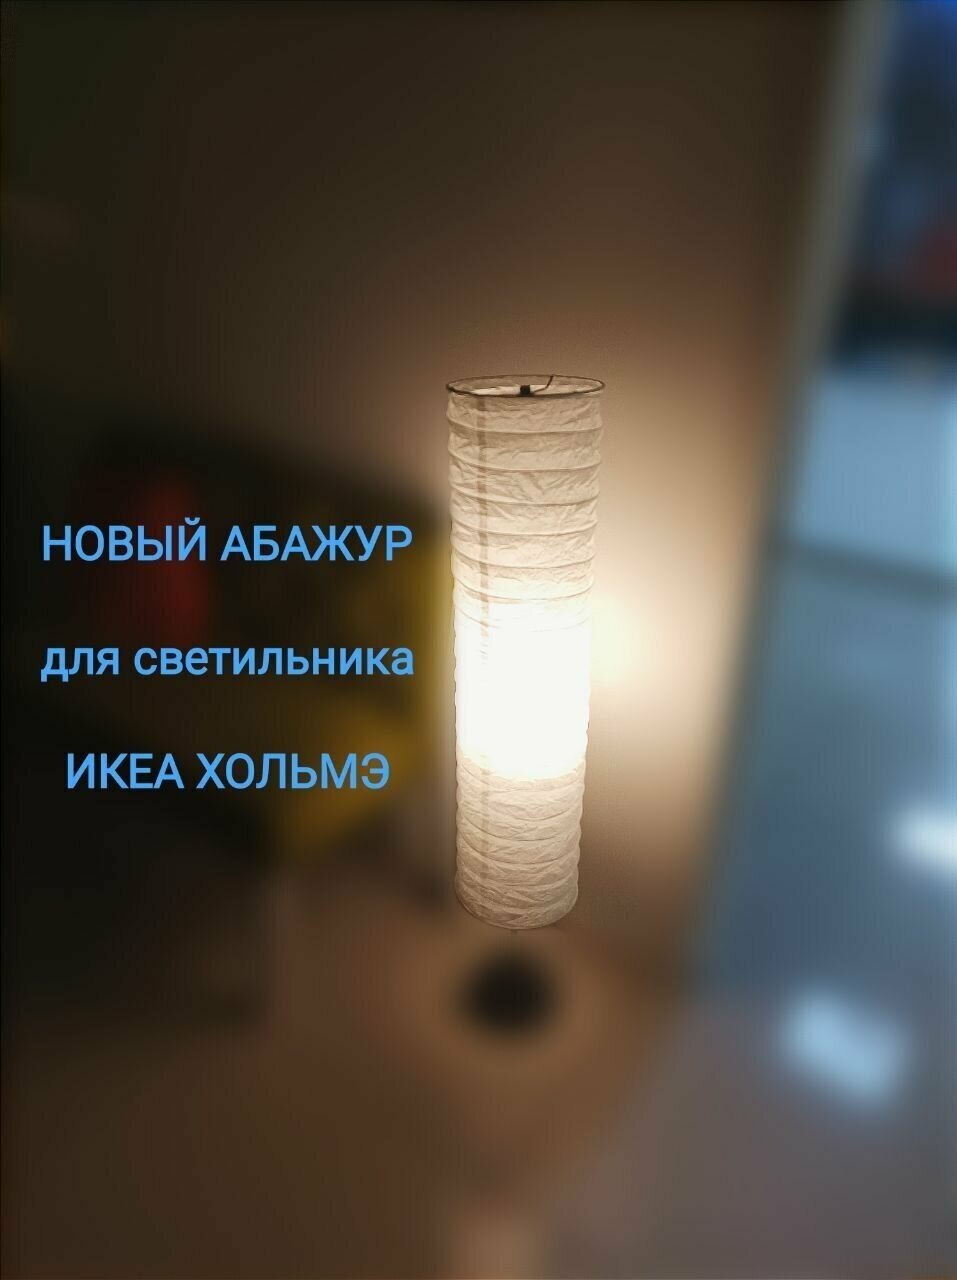 1 шт. Бумажный Абажур - плафон для напольного светильника Hostess (IKEA хольмэ).